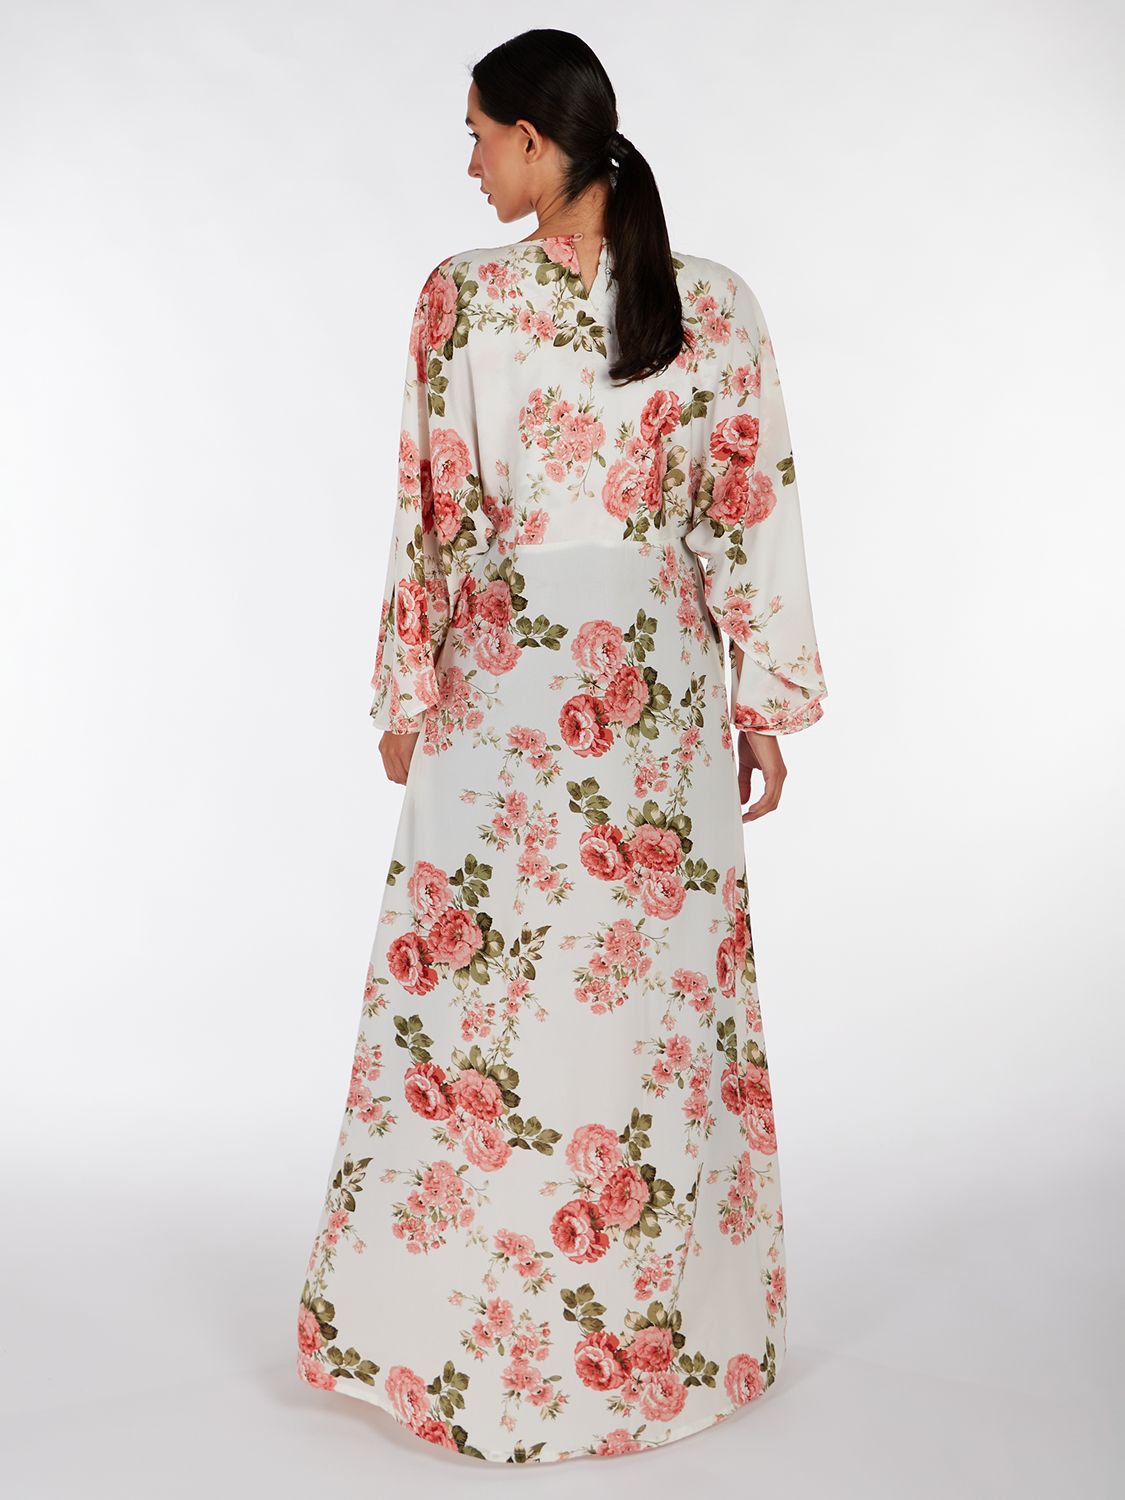 Aab Grasse Rose Print Maxi Dress, Pink/Multi, S Regular